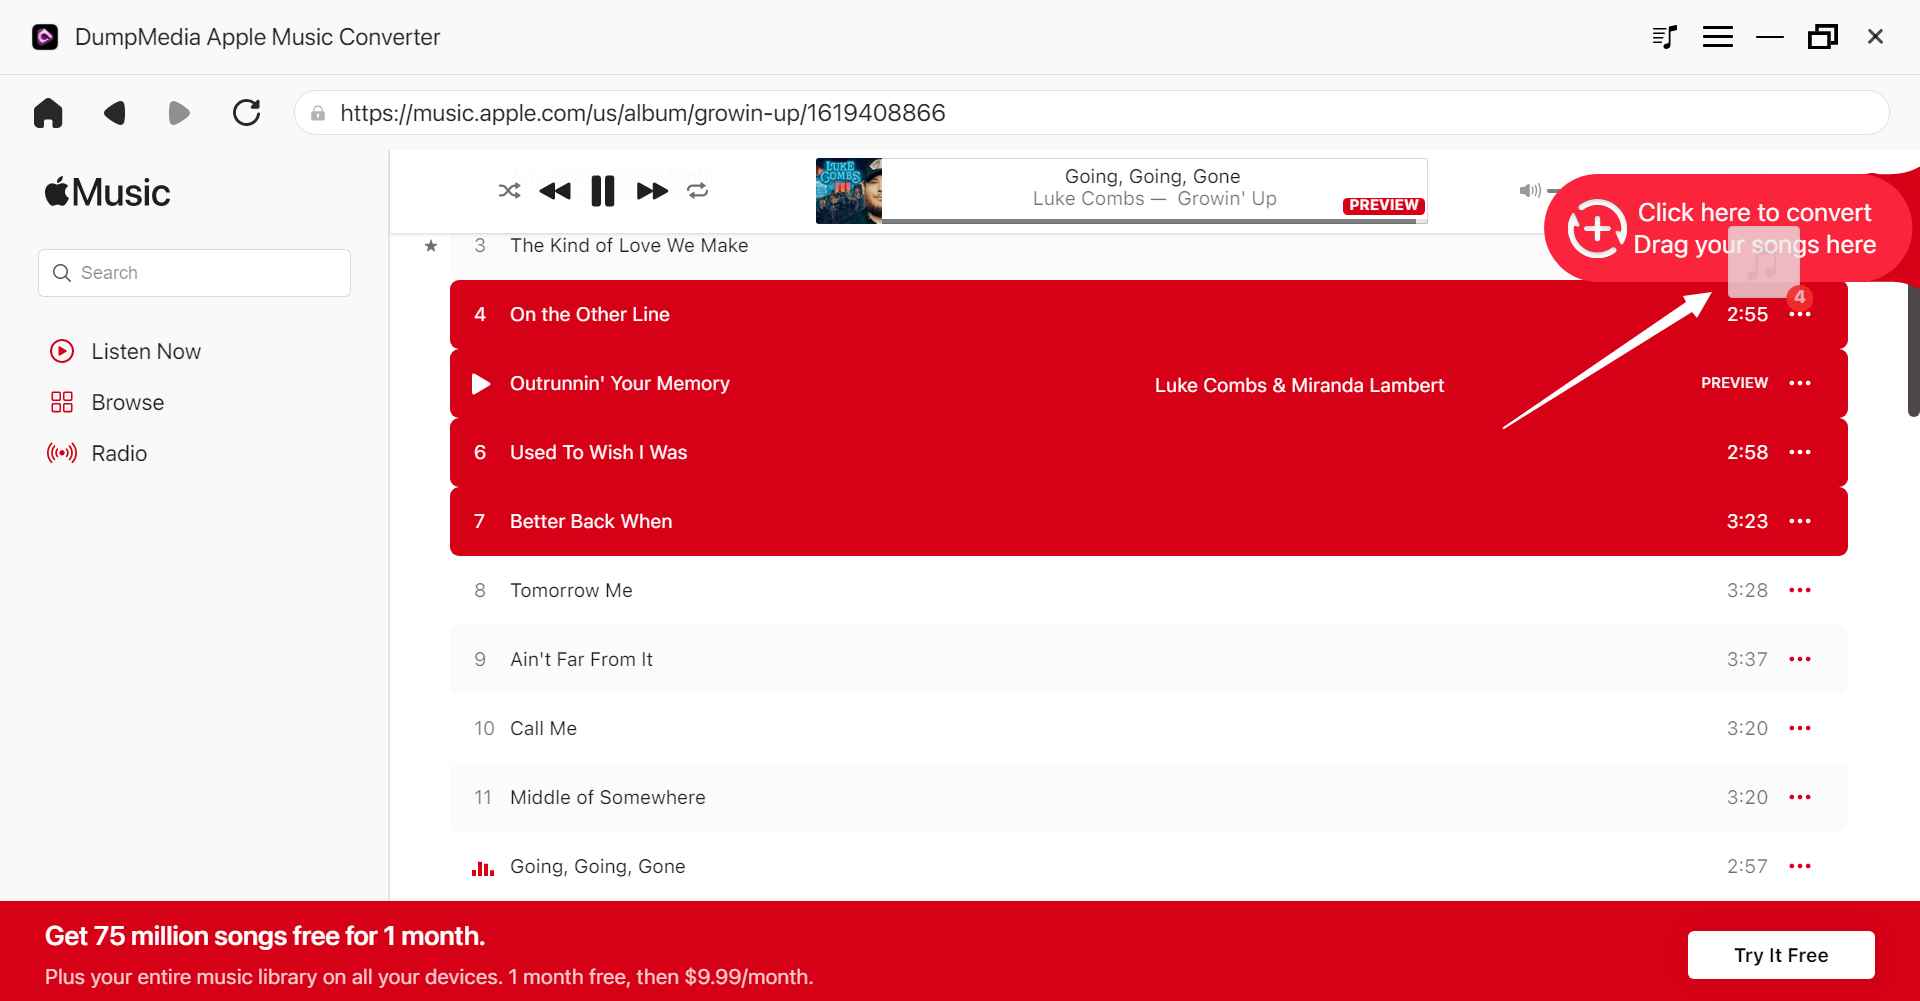 最好的 Apple Music 轉換器軟體：DumpMedia Apple Music Converter - 新增文件